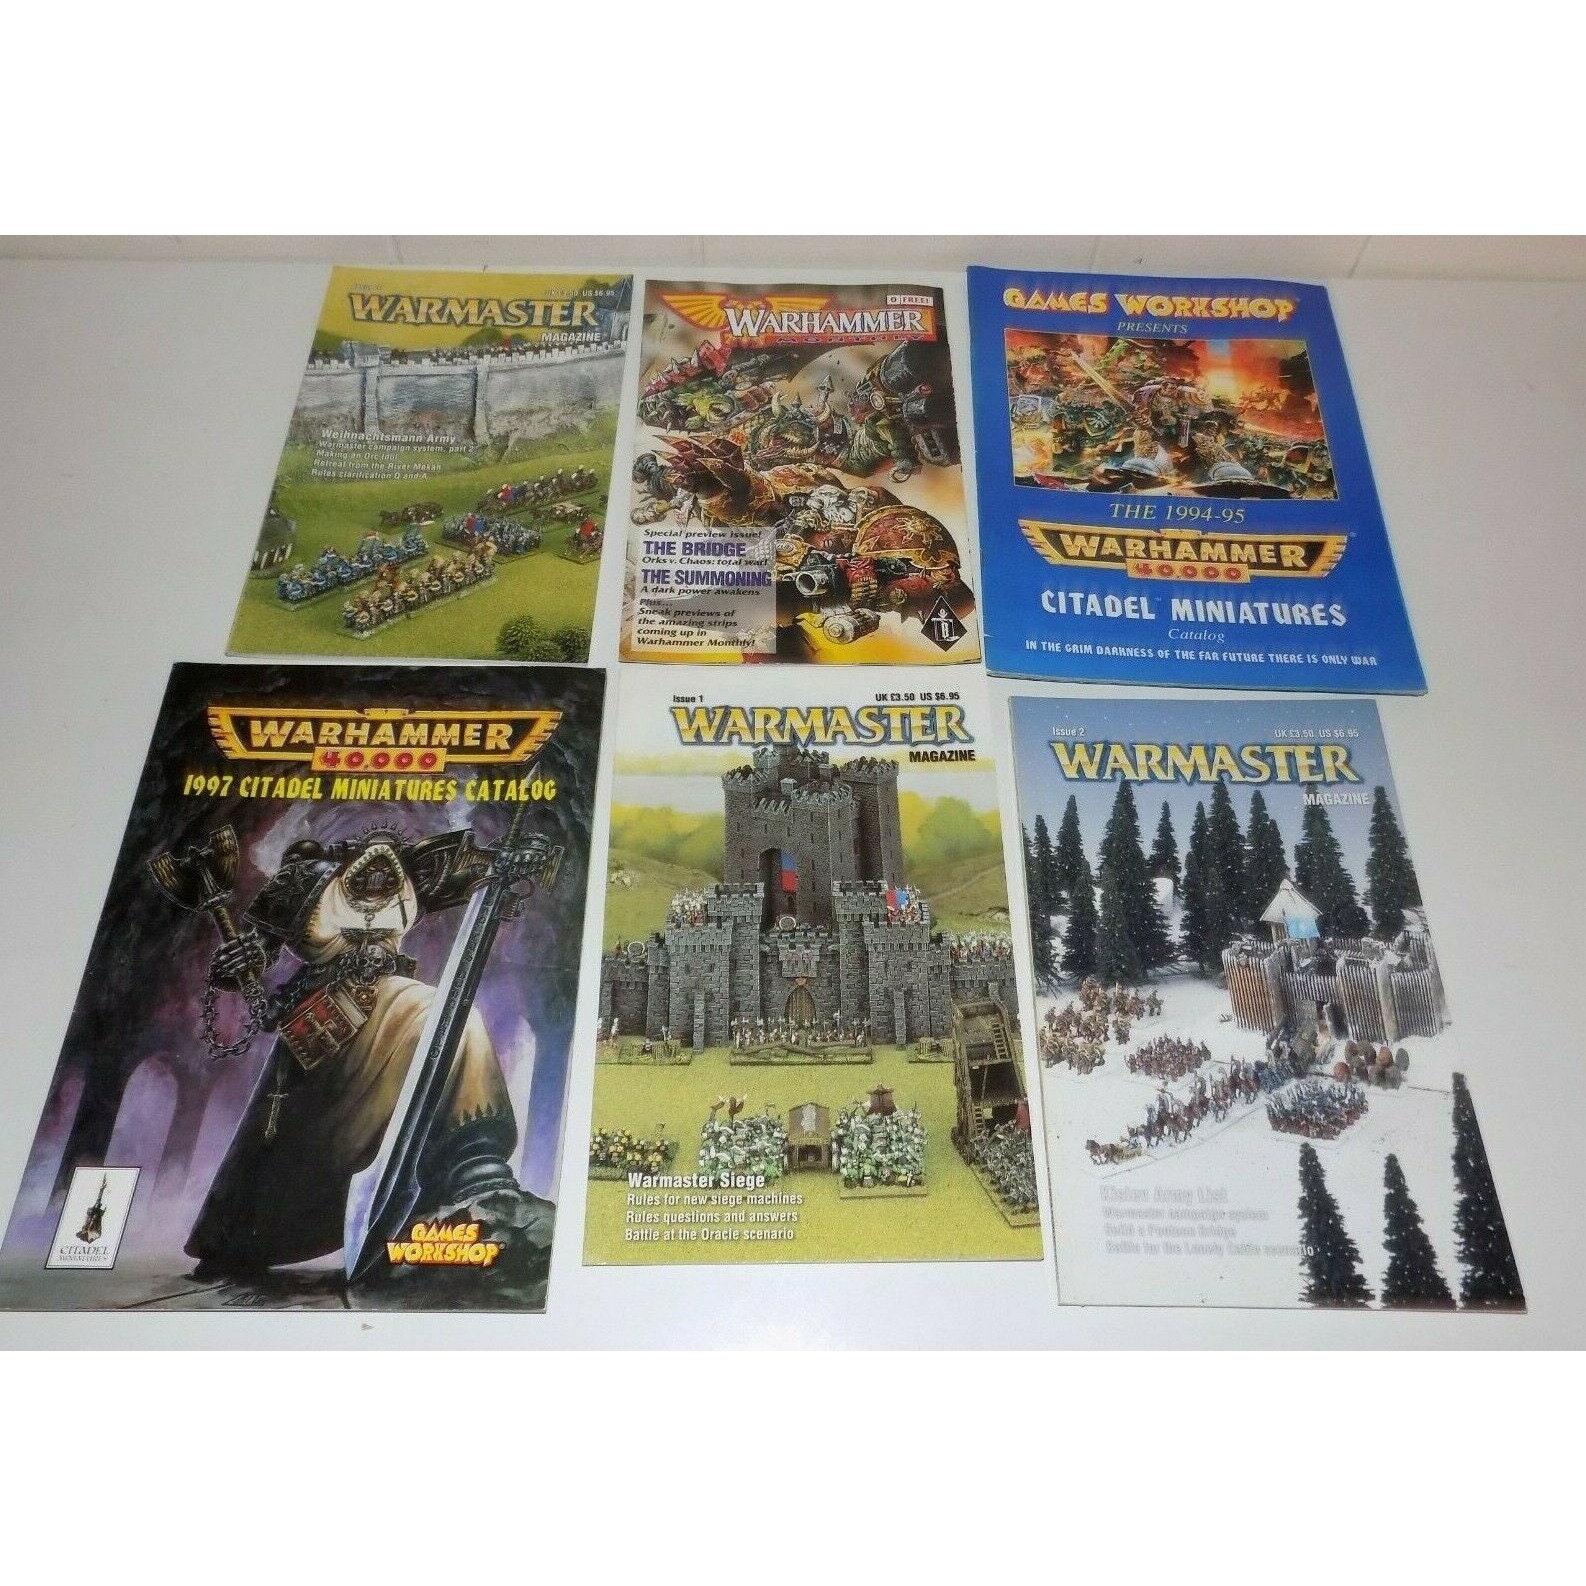 Warhammer 40,000 1997 Citadel Miniatures Catalog very good condition 